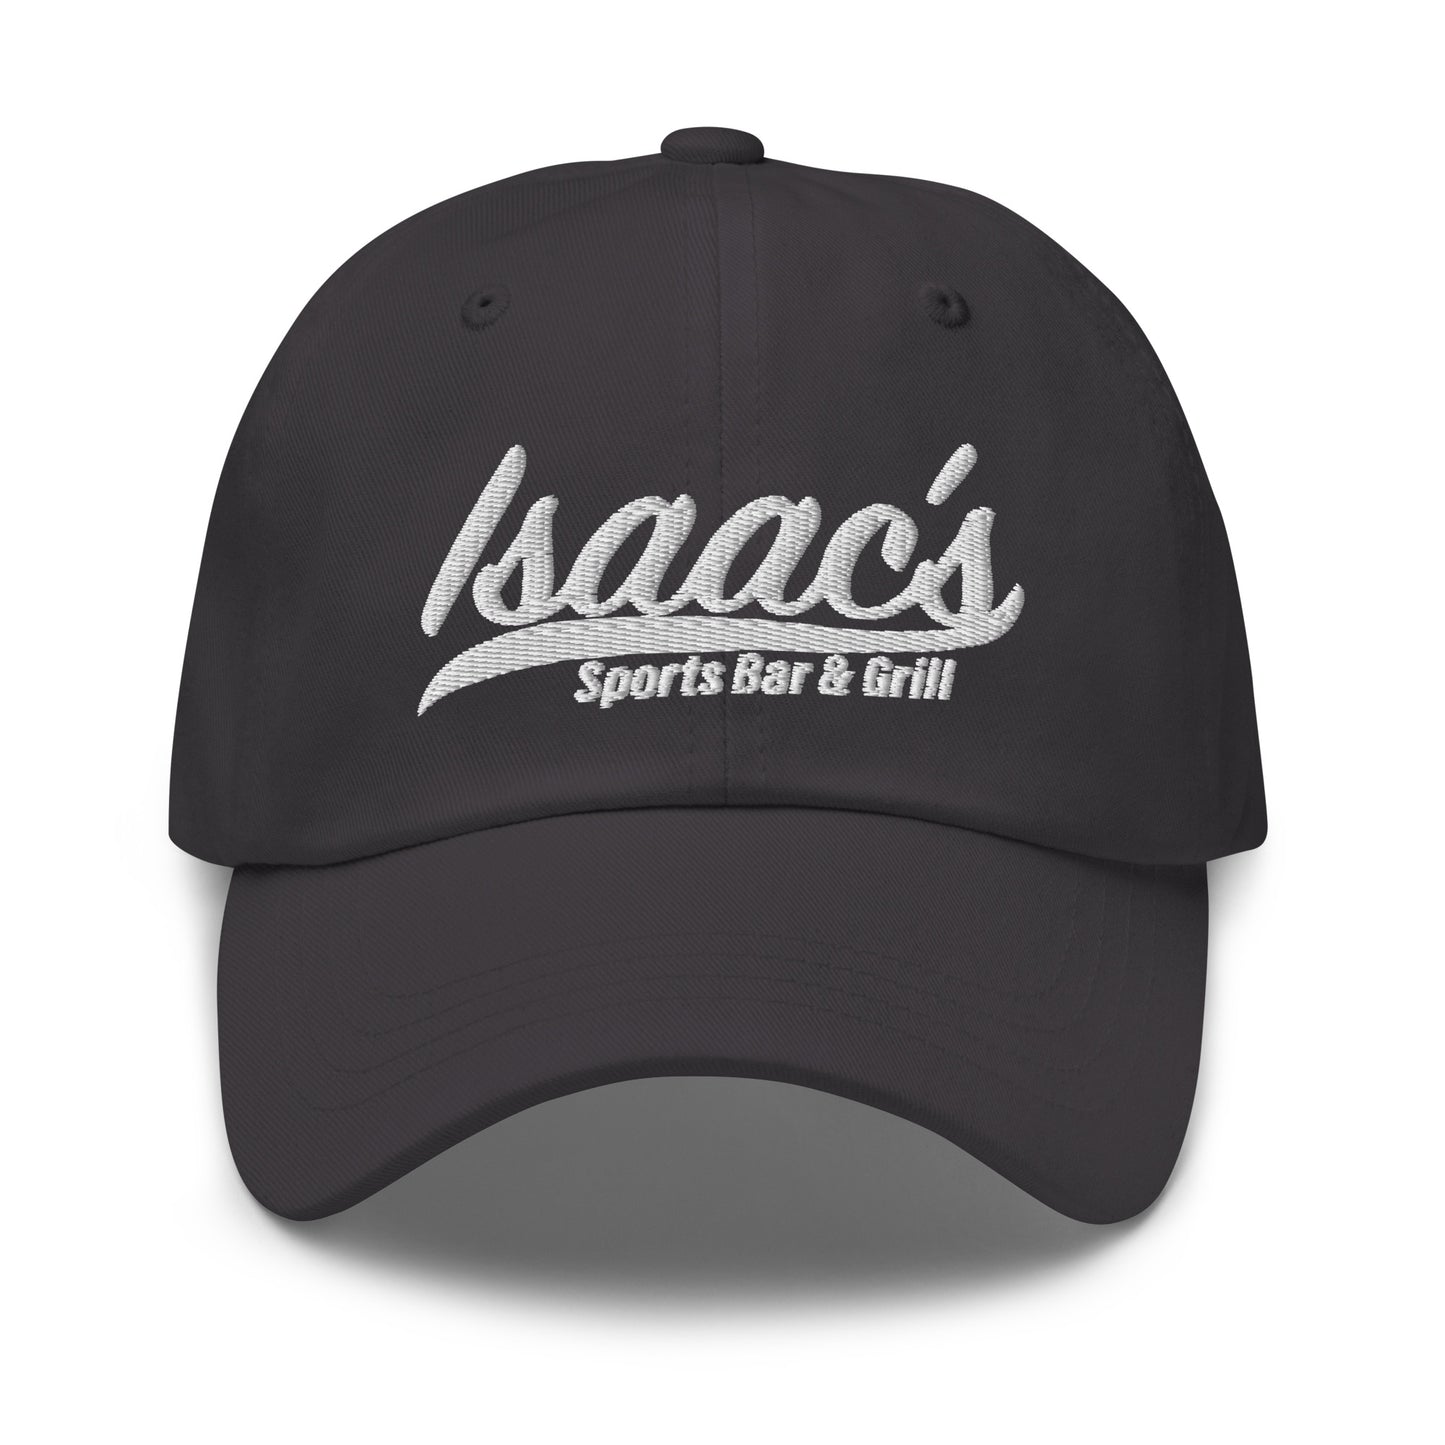 Isaac's "dad" hat